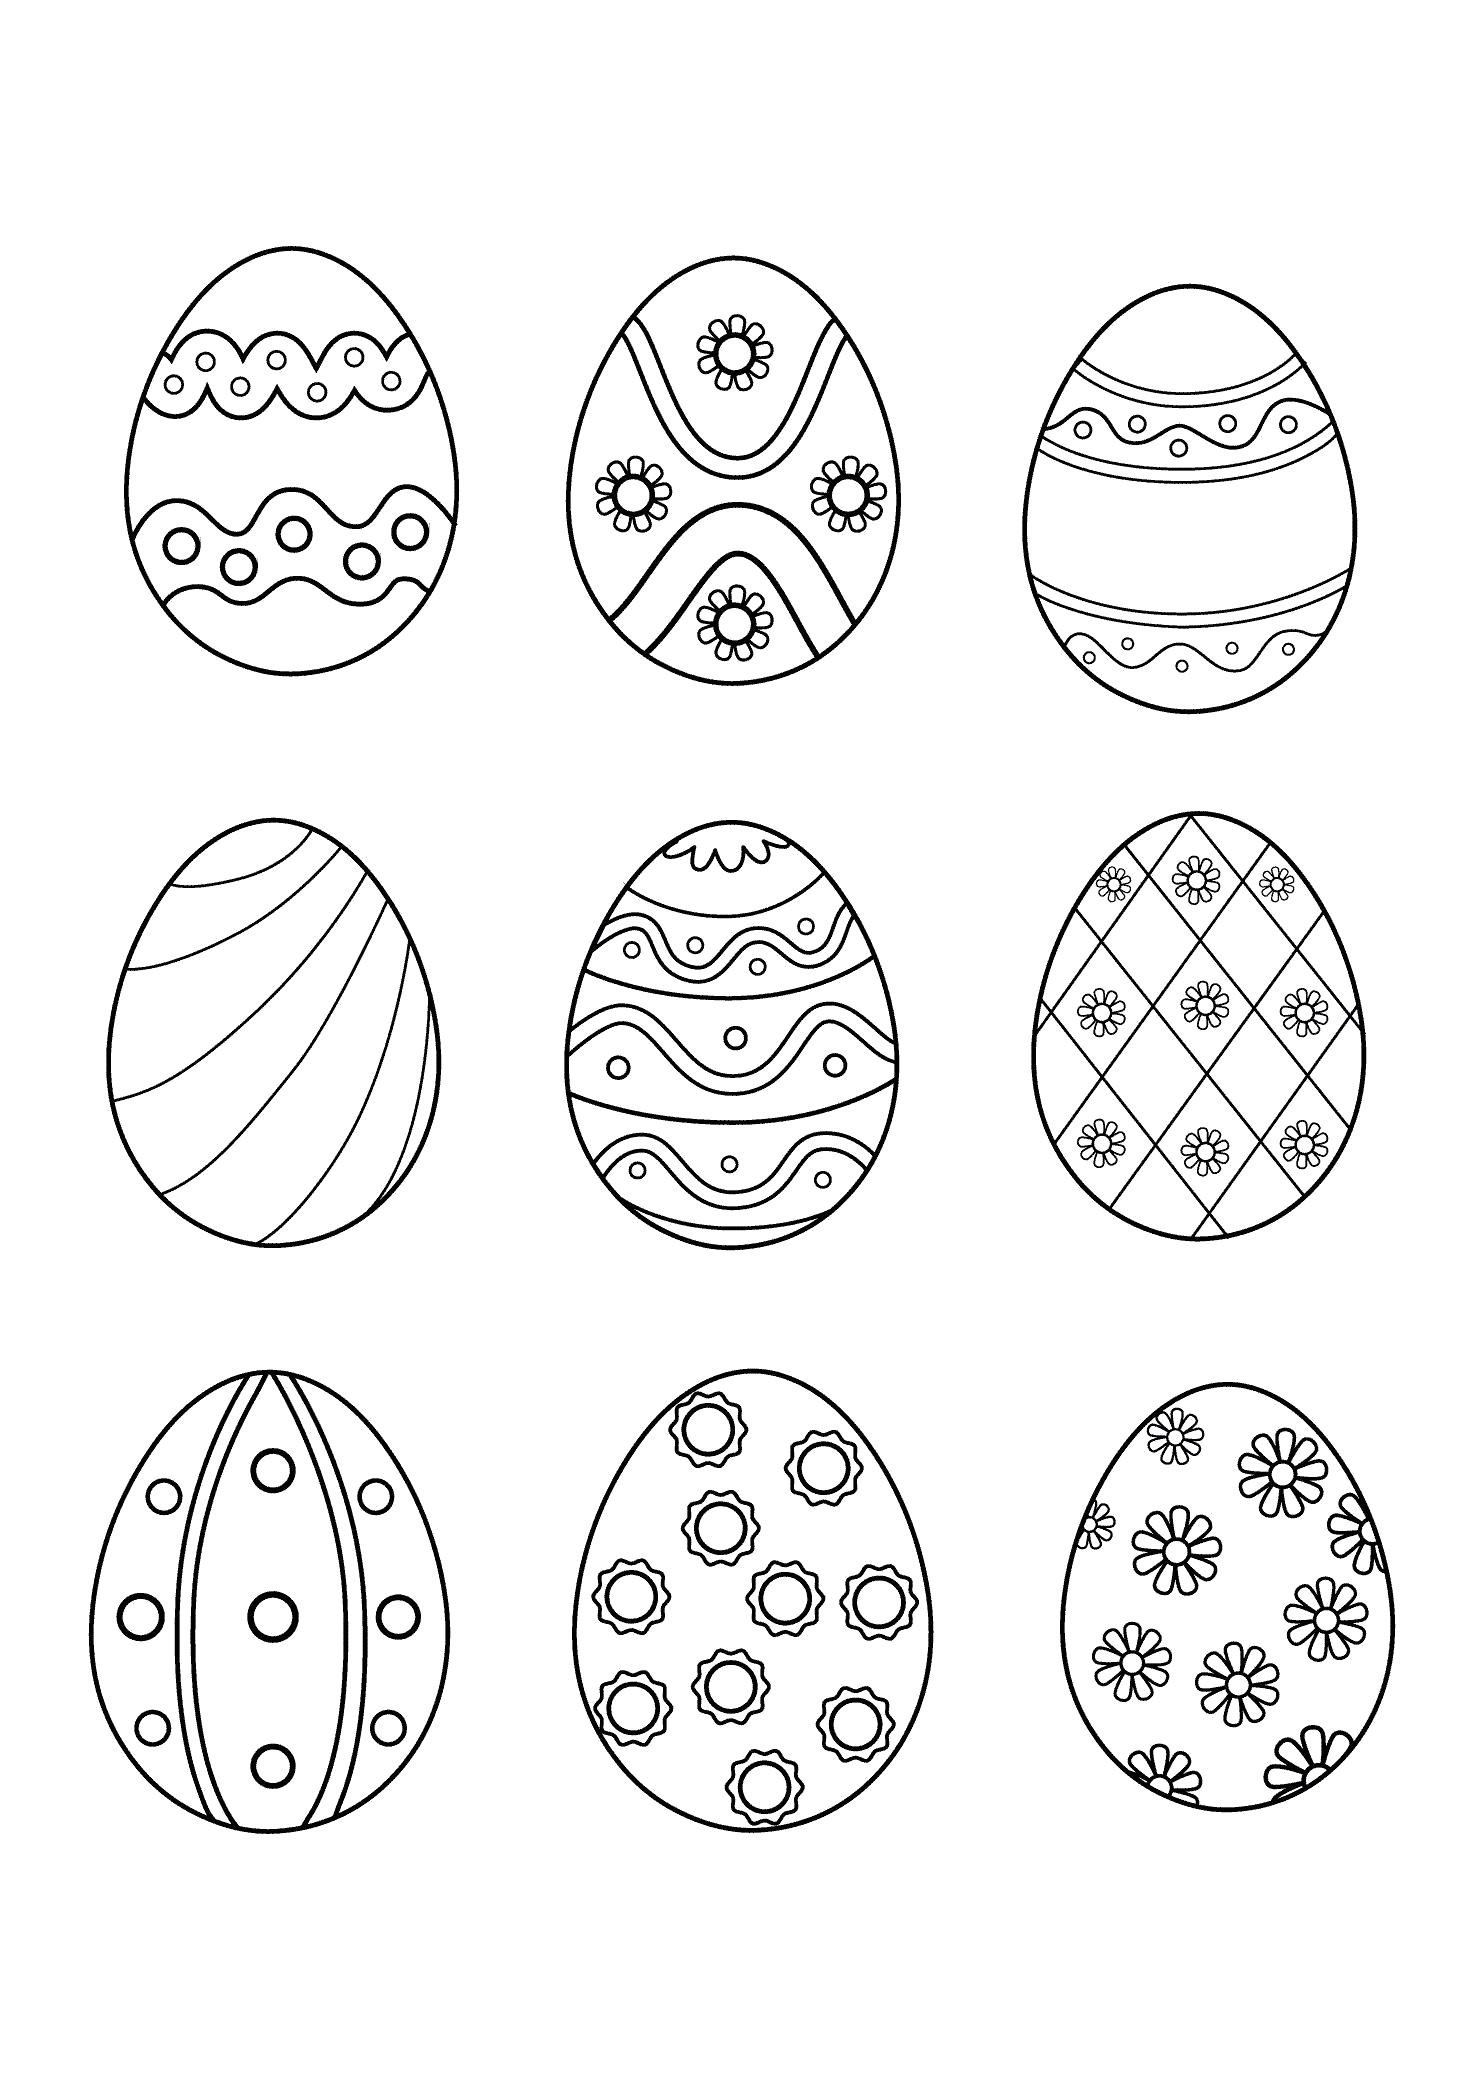 Название: Раскраска Раскраска Яйца. Раскраска Пасхальные яйца, раскрашенные яйца, яйца к пасхе, картинка пасха. Категория: Пасха. Теги: Пасха.